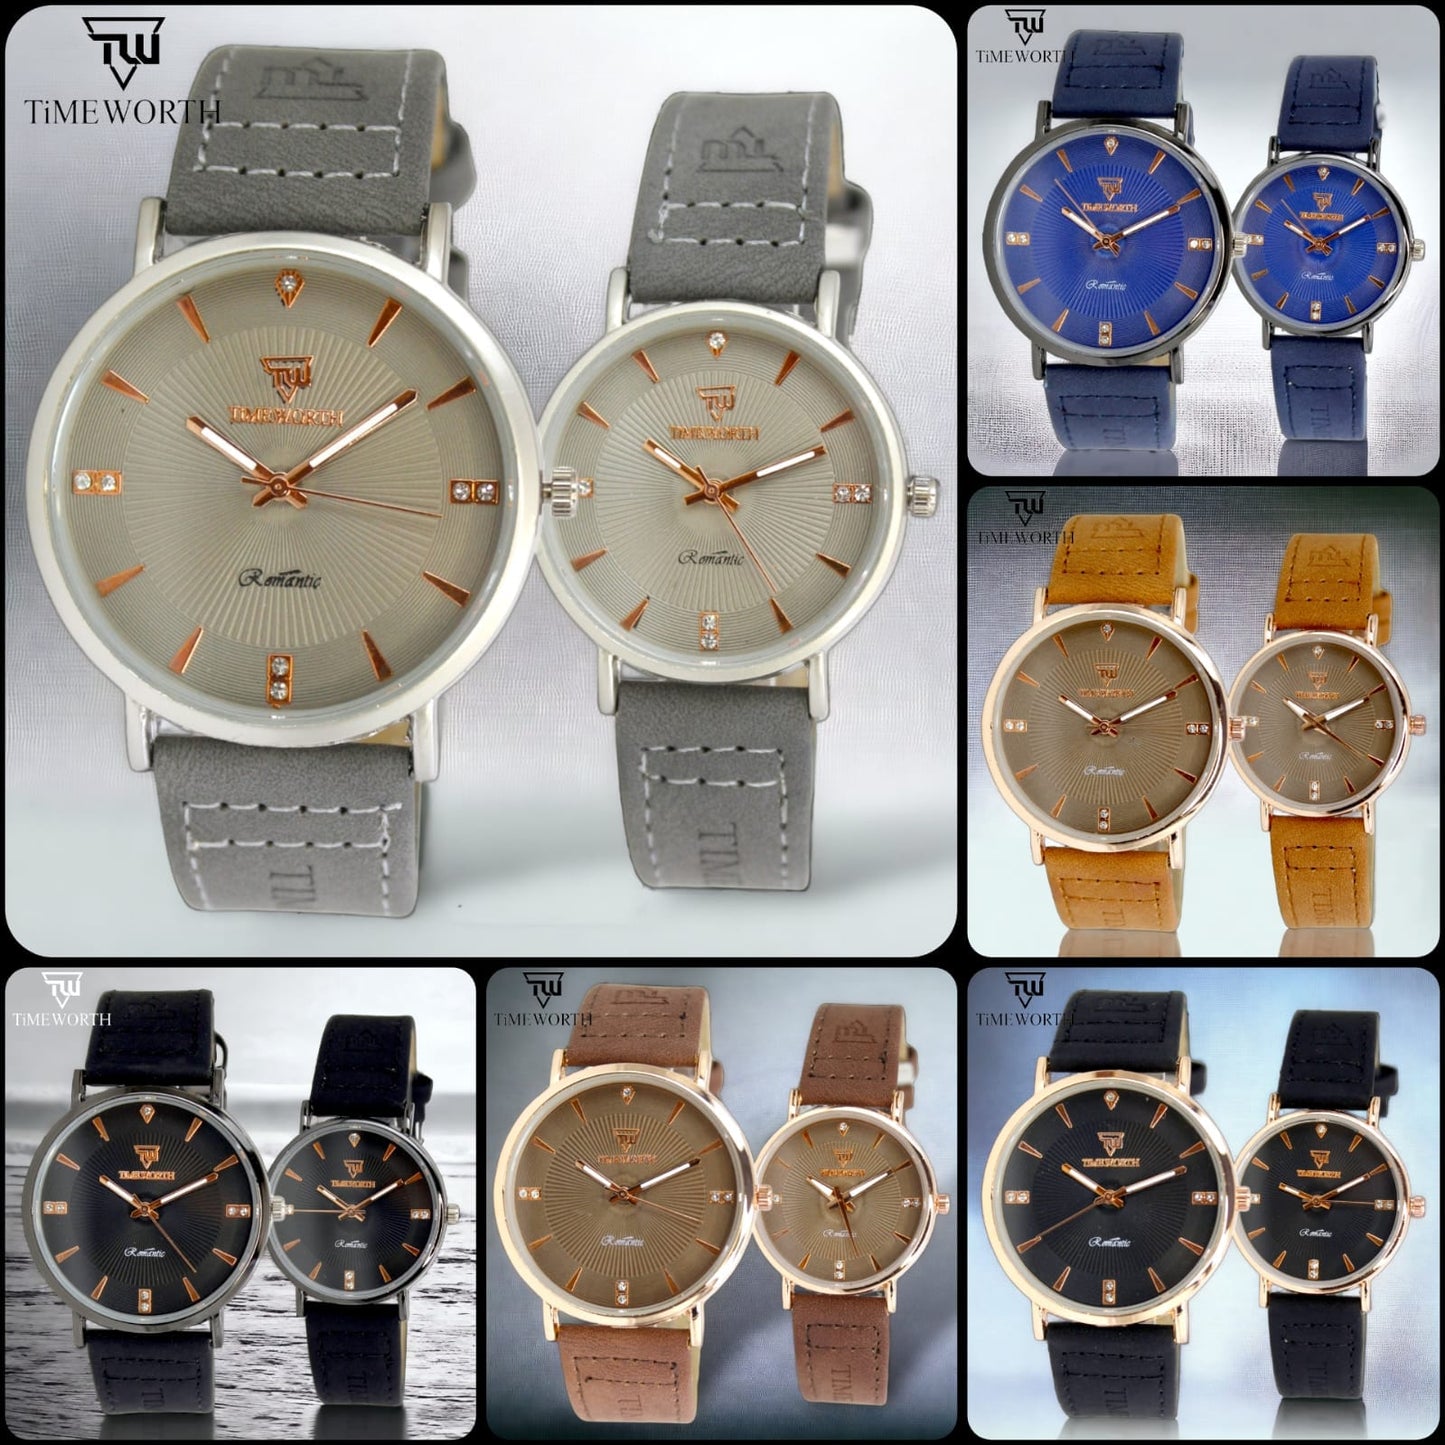 Timeworth Round Dial Stylish Pair Watch